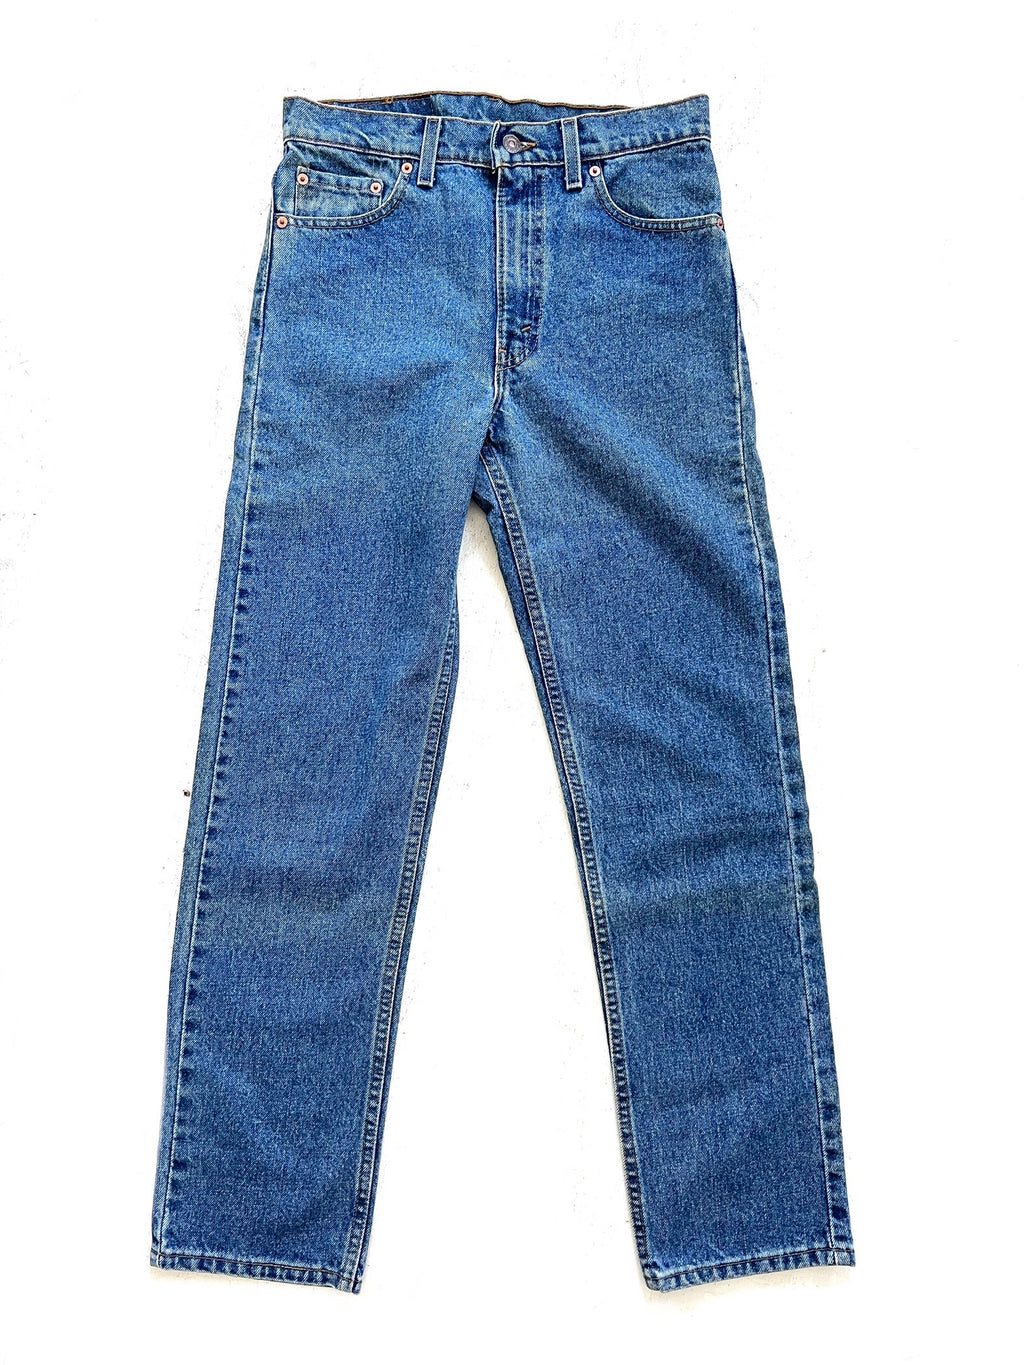 LEVI'S 505 Vintage Zip Fly Jeans 30 x 30.5